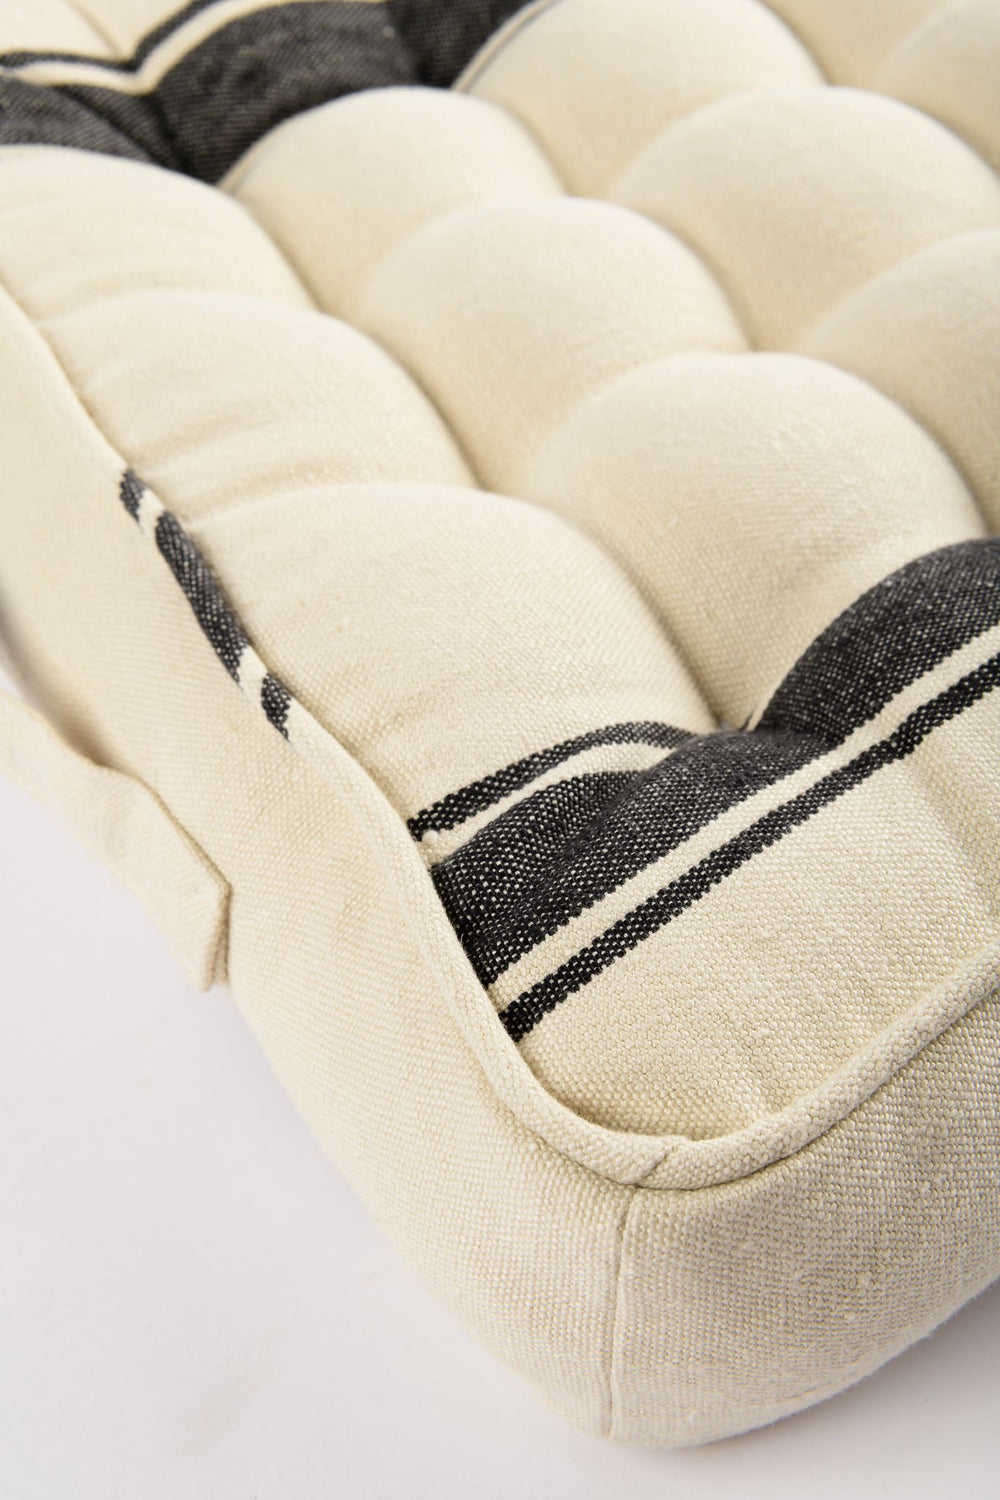 mind-the-gap-padded-seat-cushion-black-and-white-stripe-hajdu-stripe